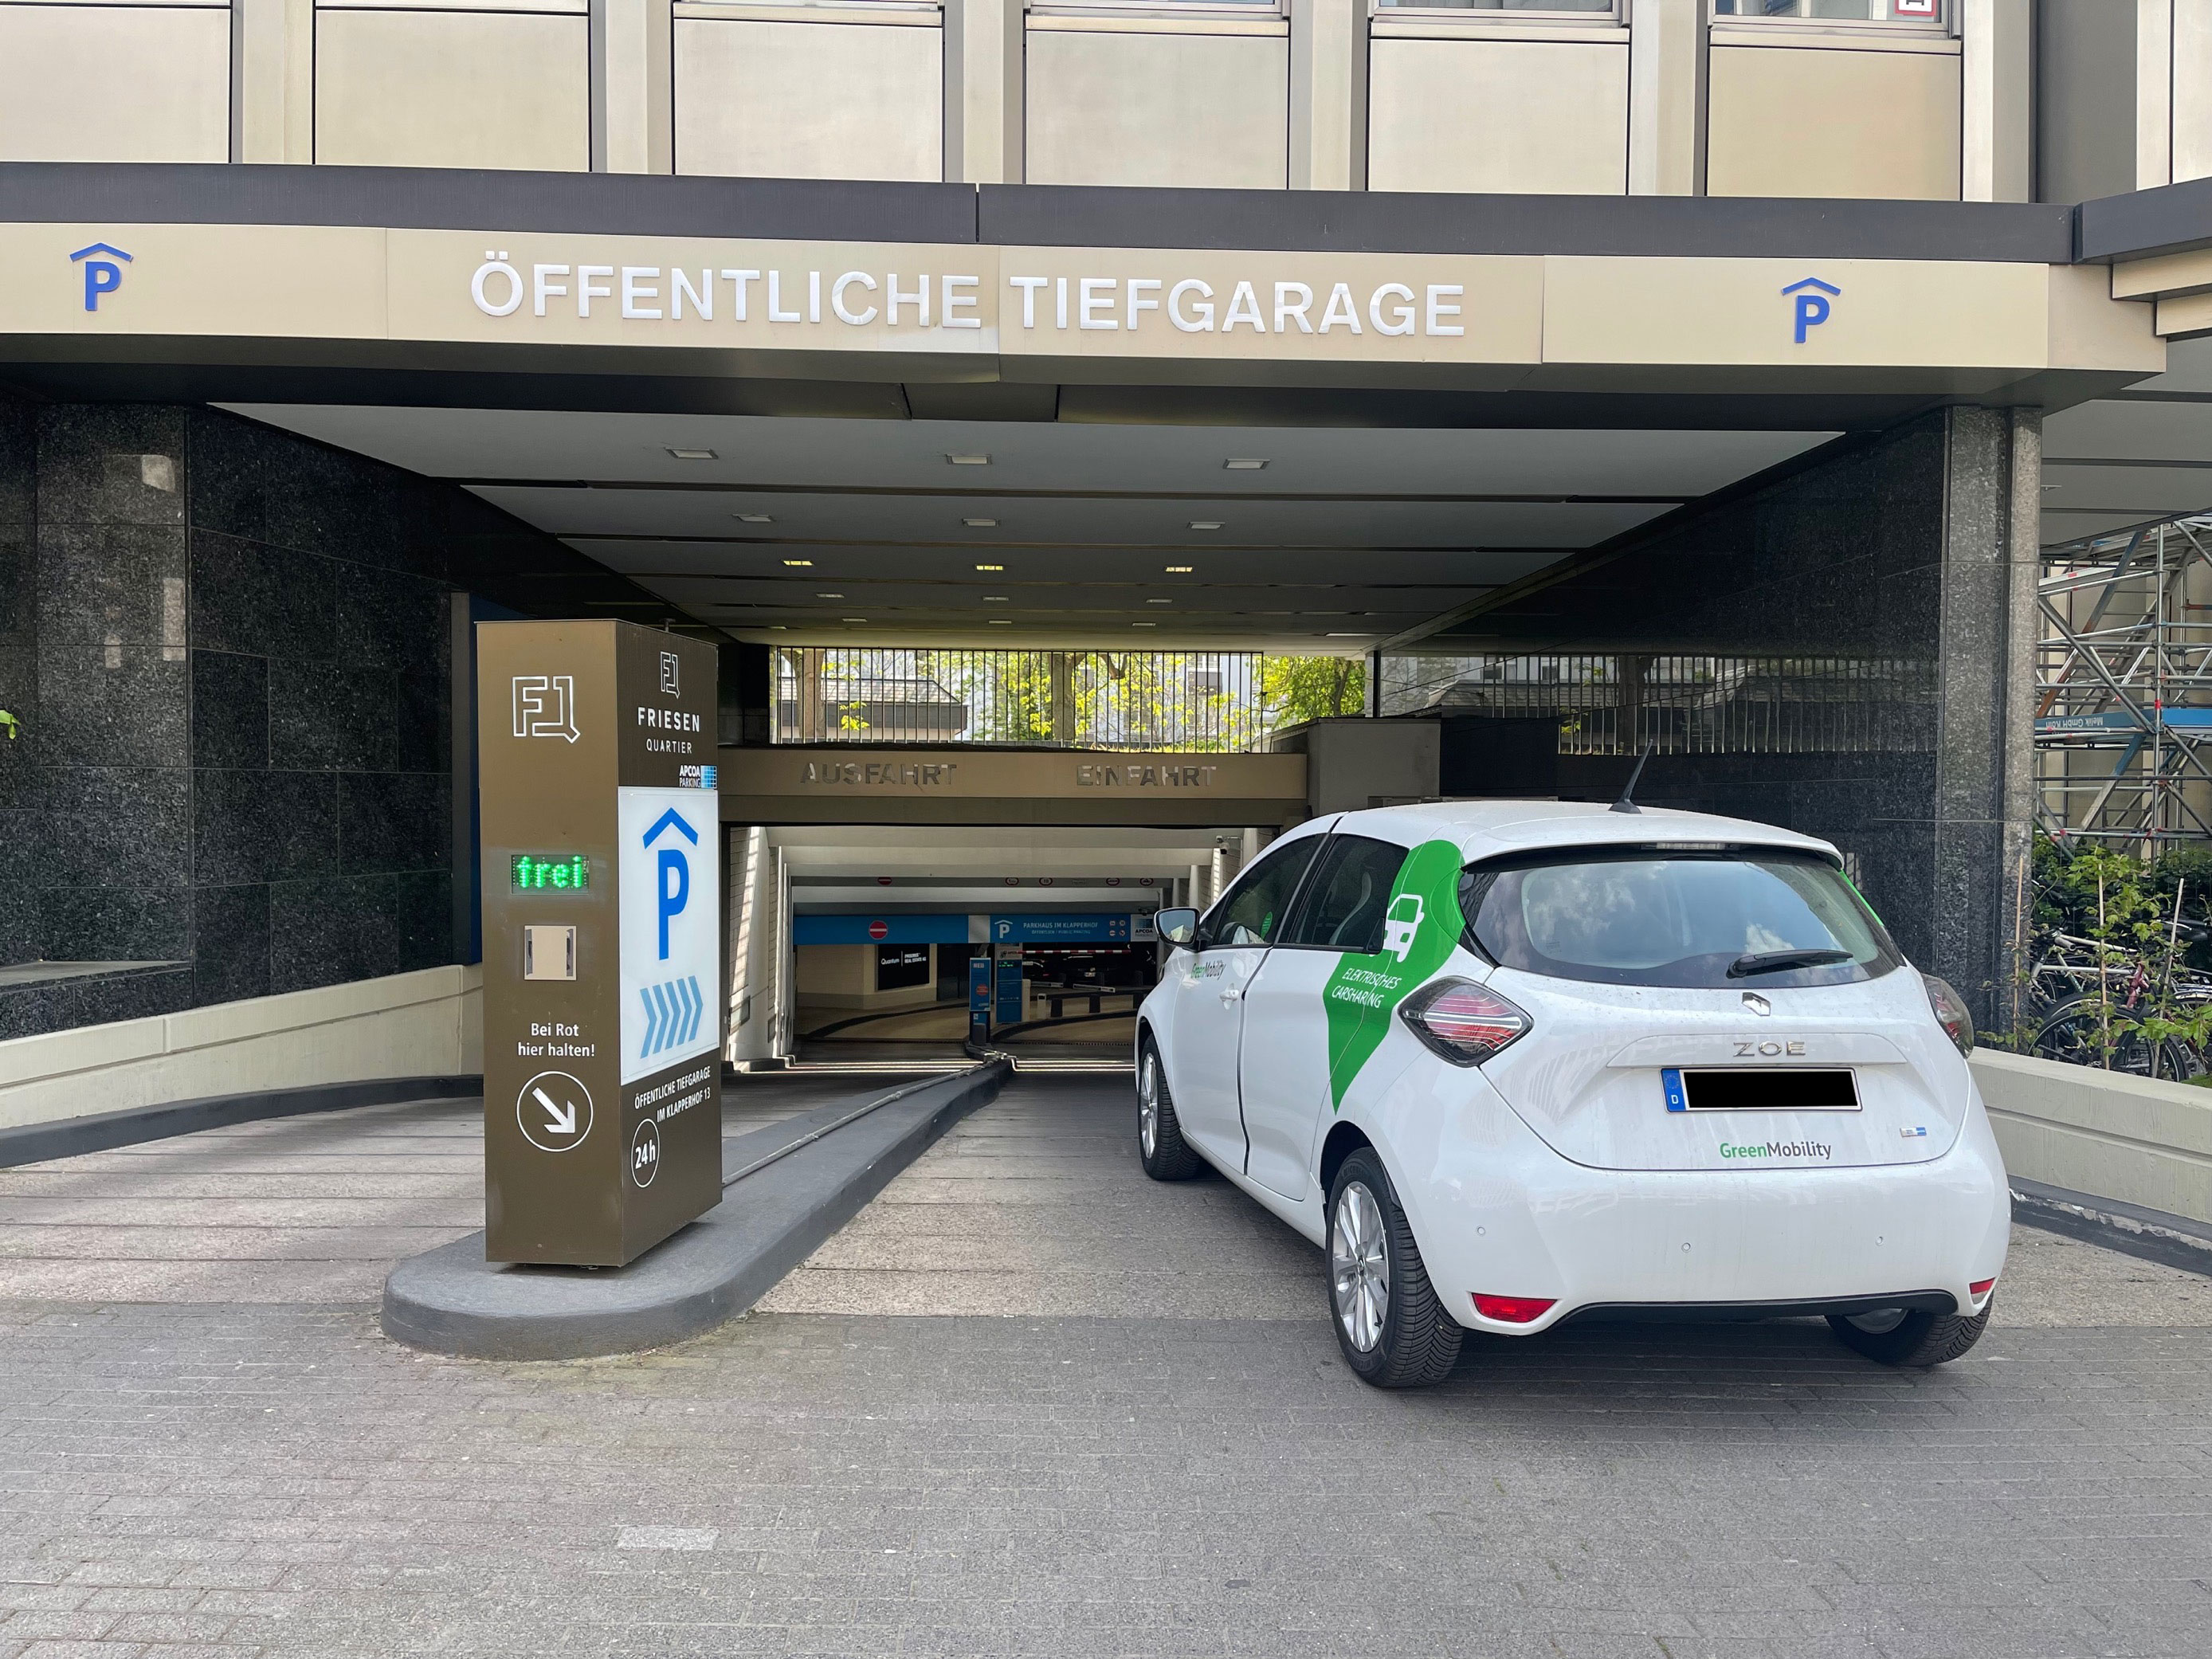 APCOA Kooperation mit GreenMobility in Köln